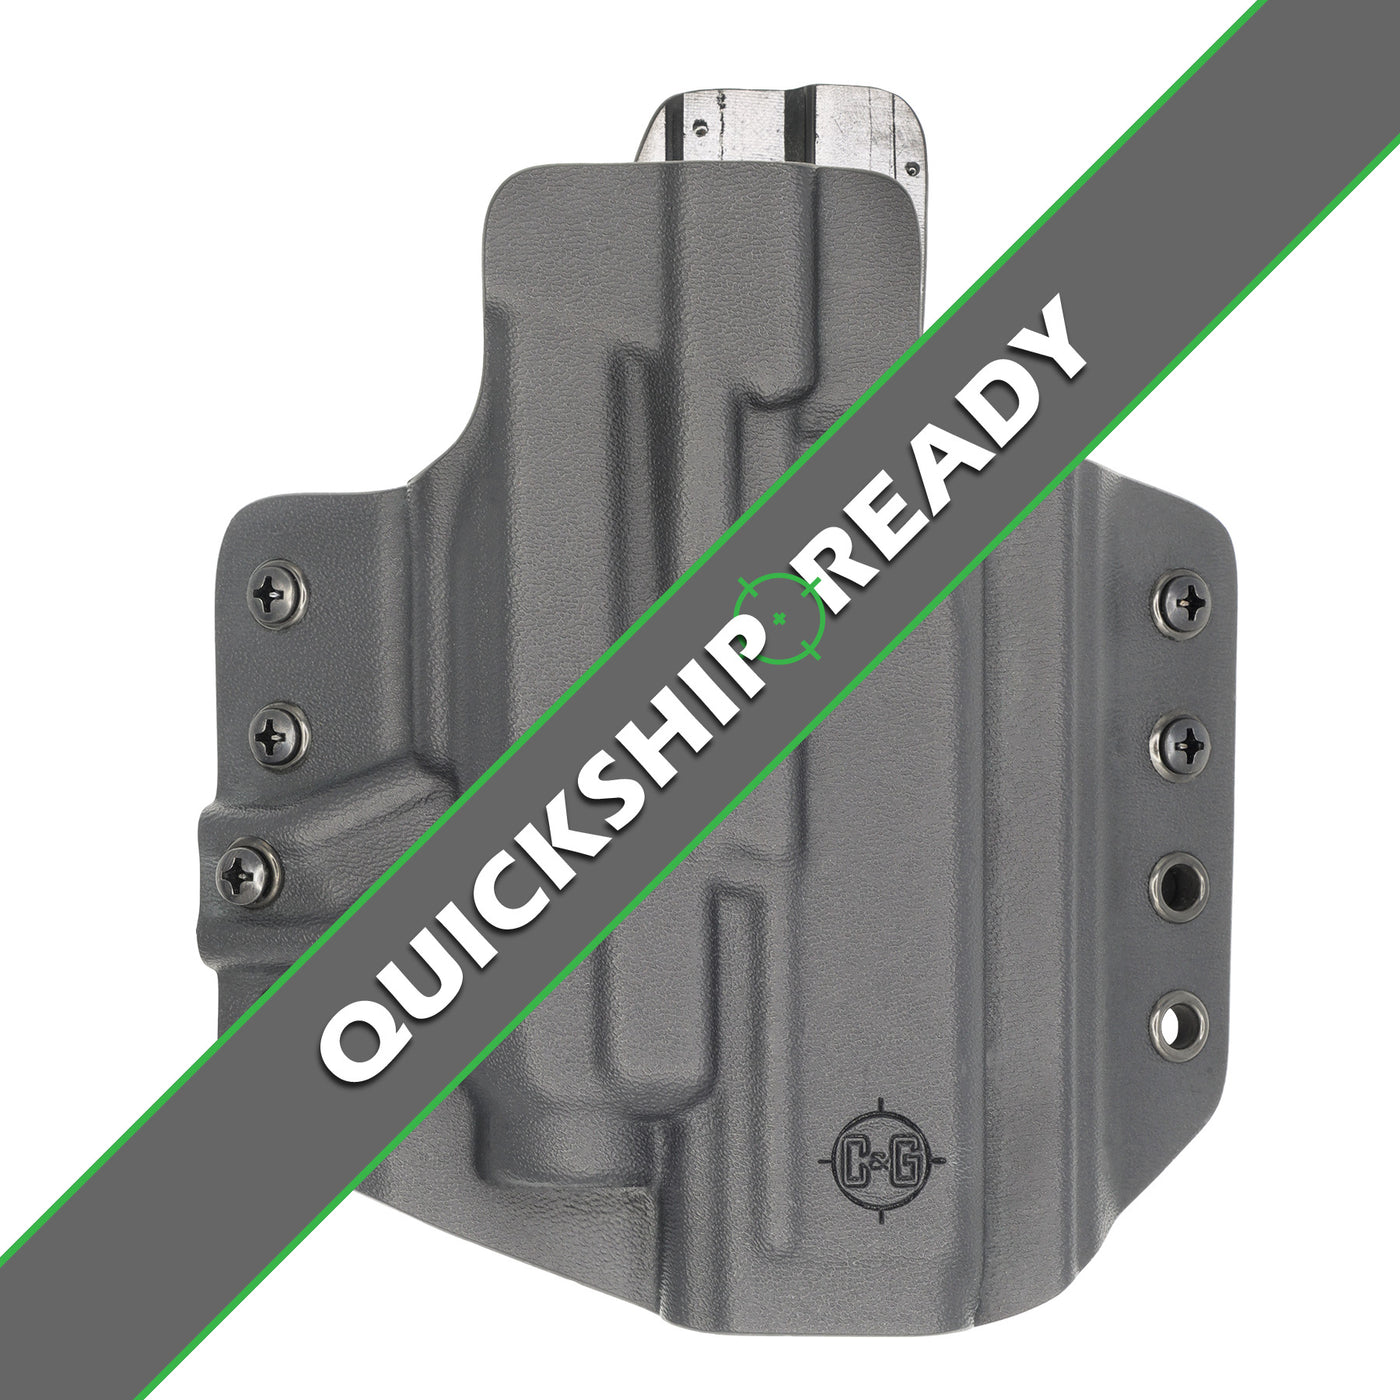 C&G Holsters Quickship OWB Tactical Glock 19/23 Streamlight TLR7